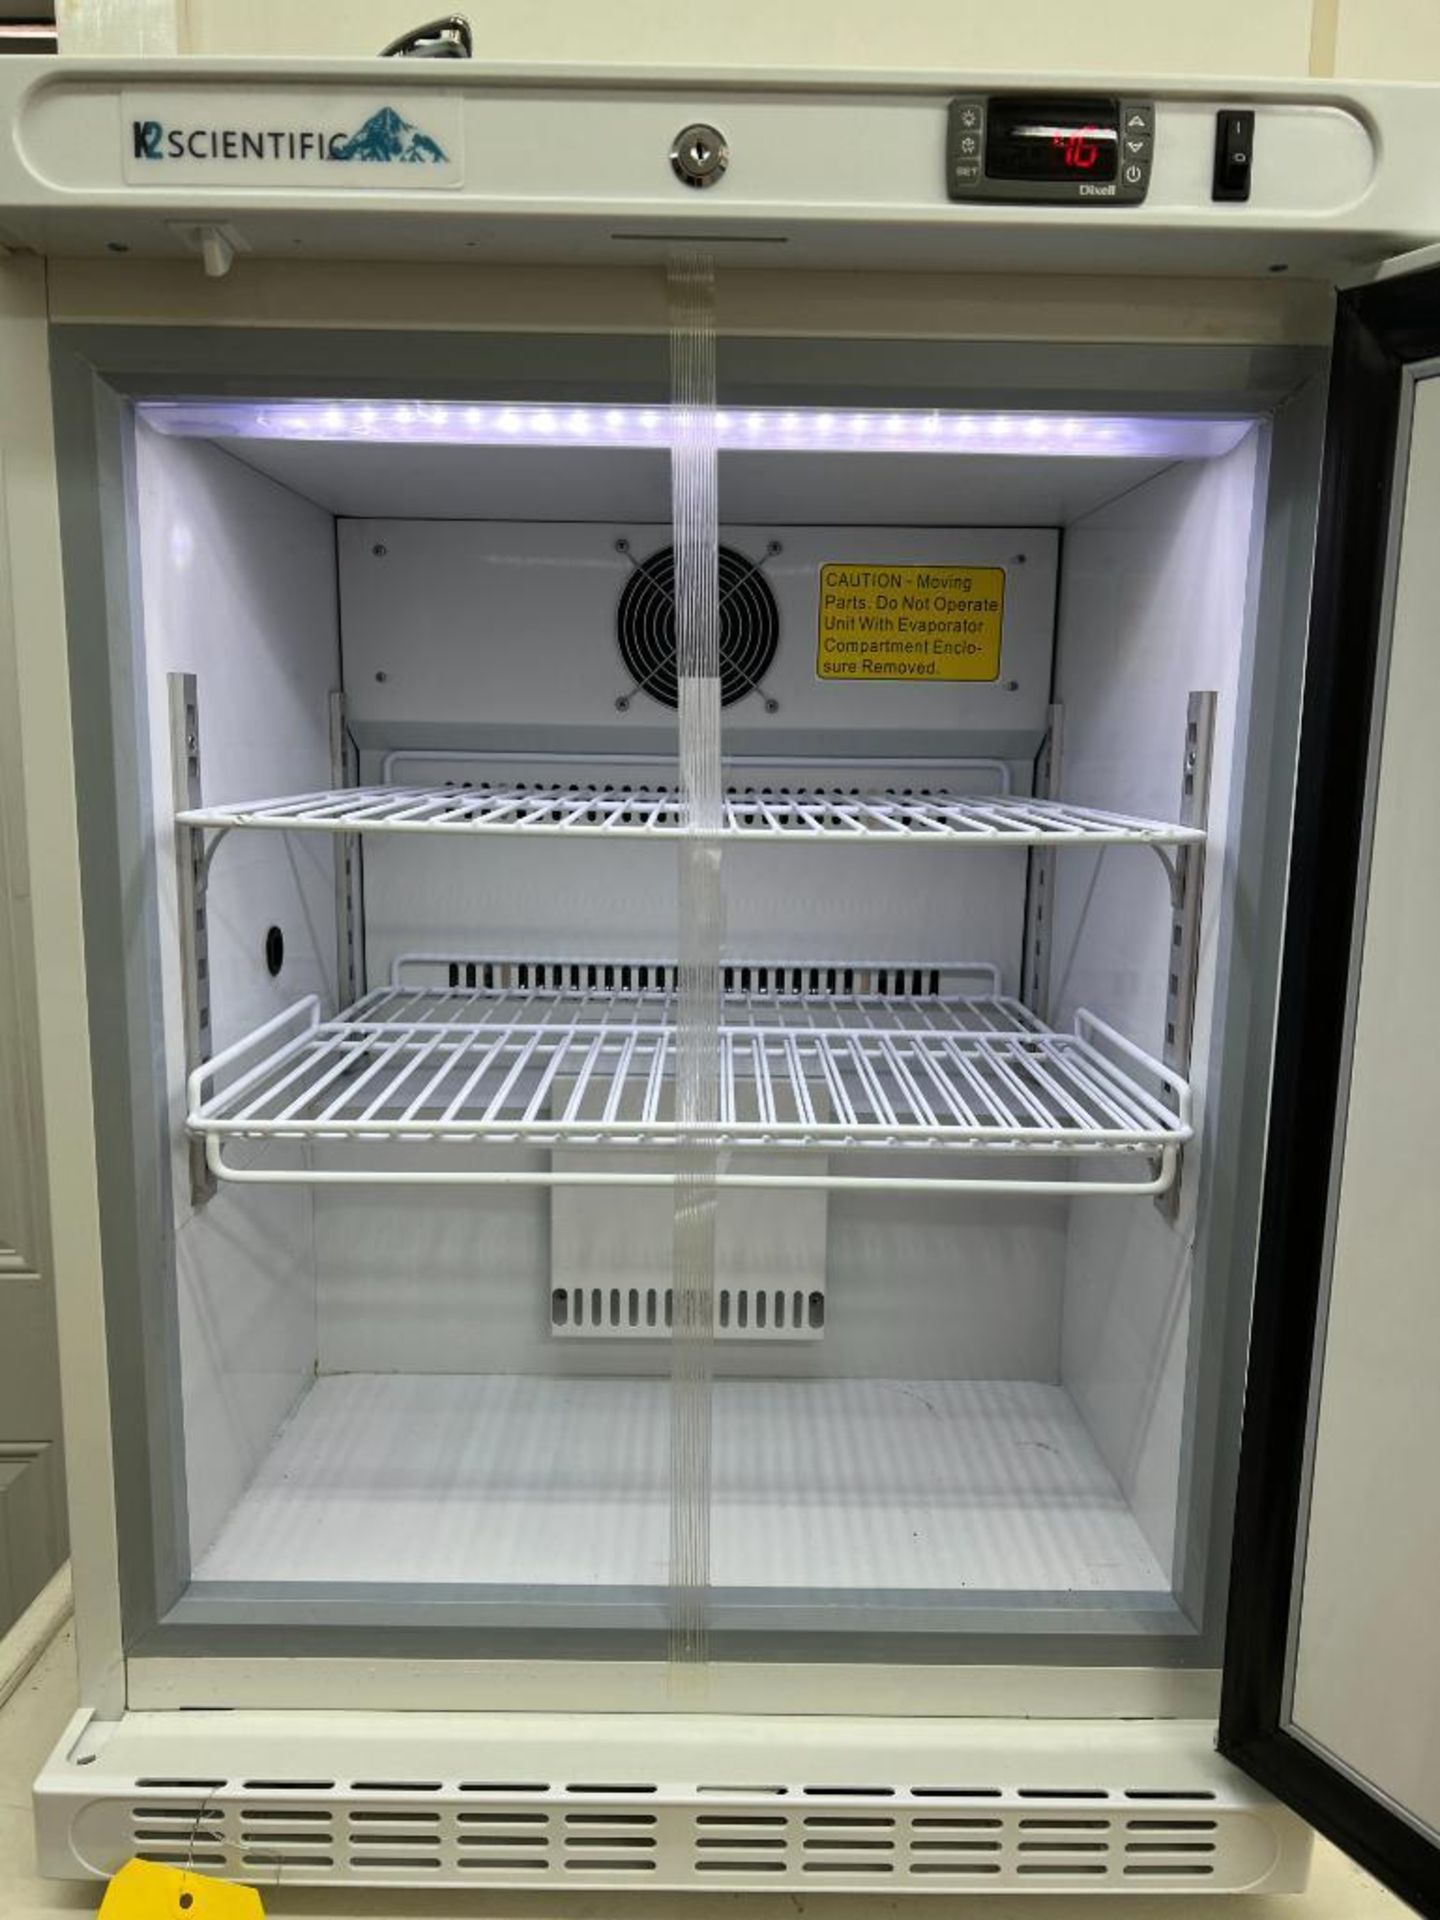 NEW K2 Scientific Lab Refrigerator - Image 3 of 4